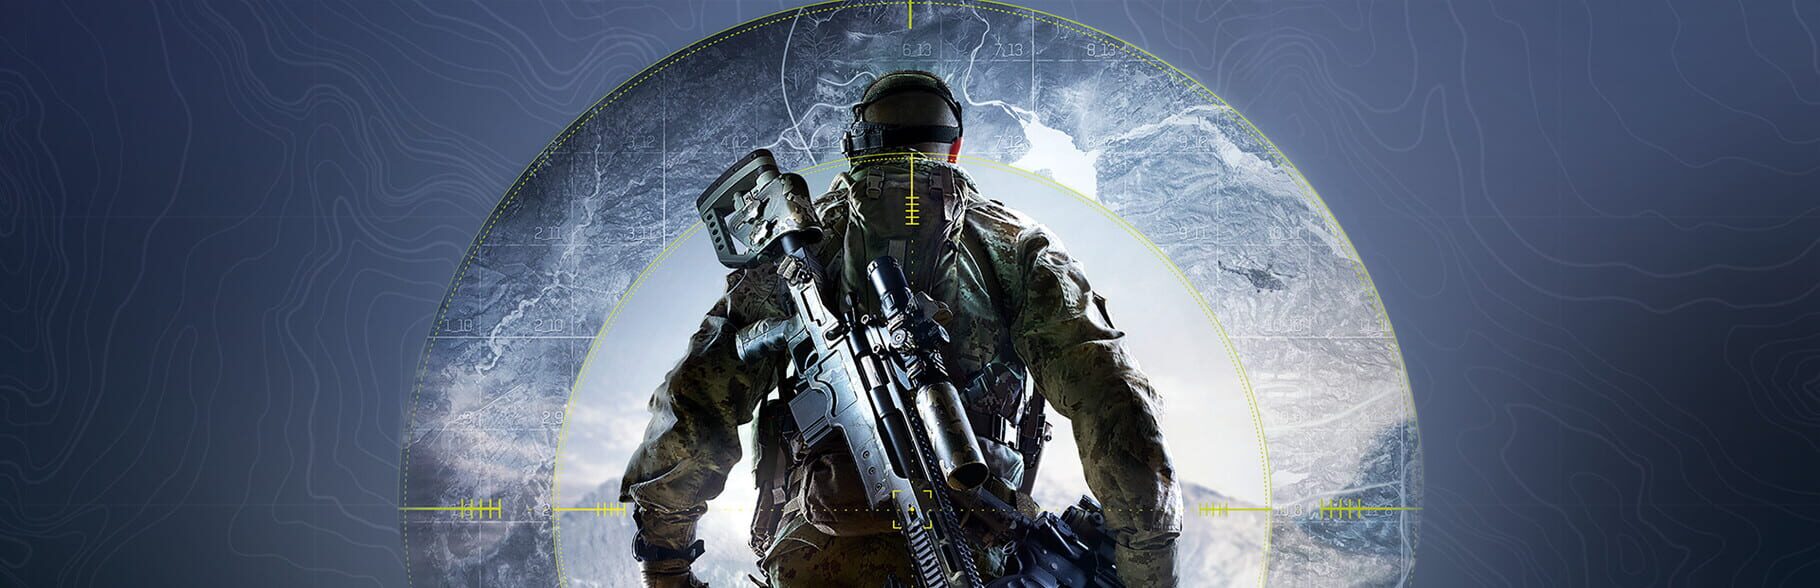 Sniper: Ghost Warrior 3 Image